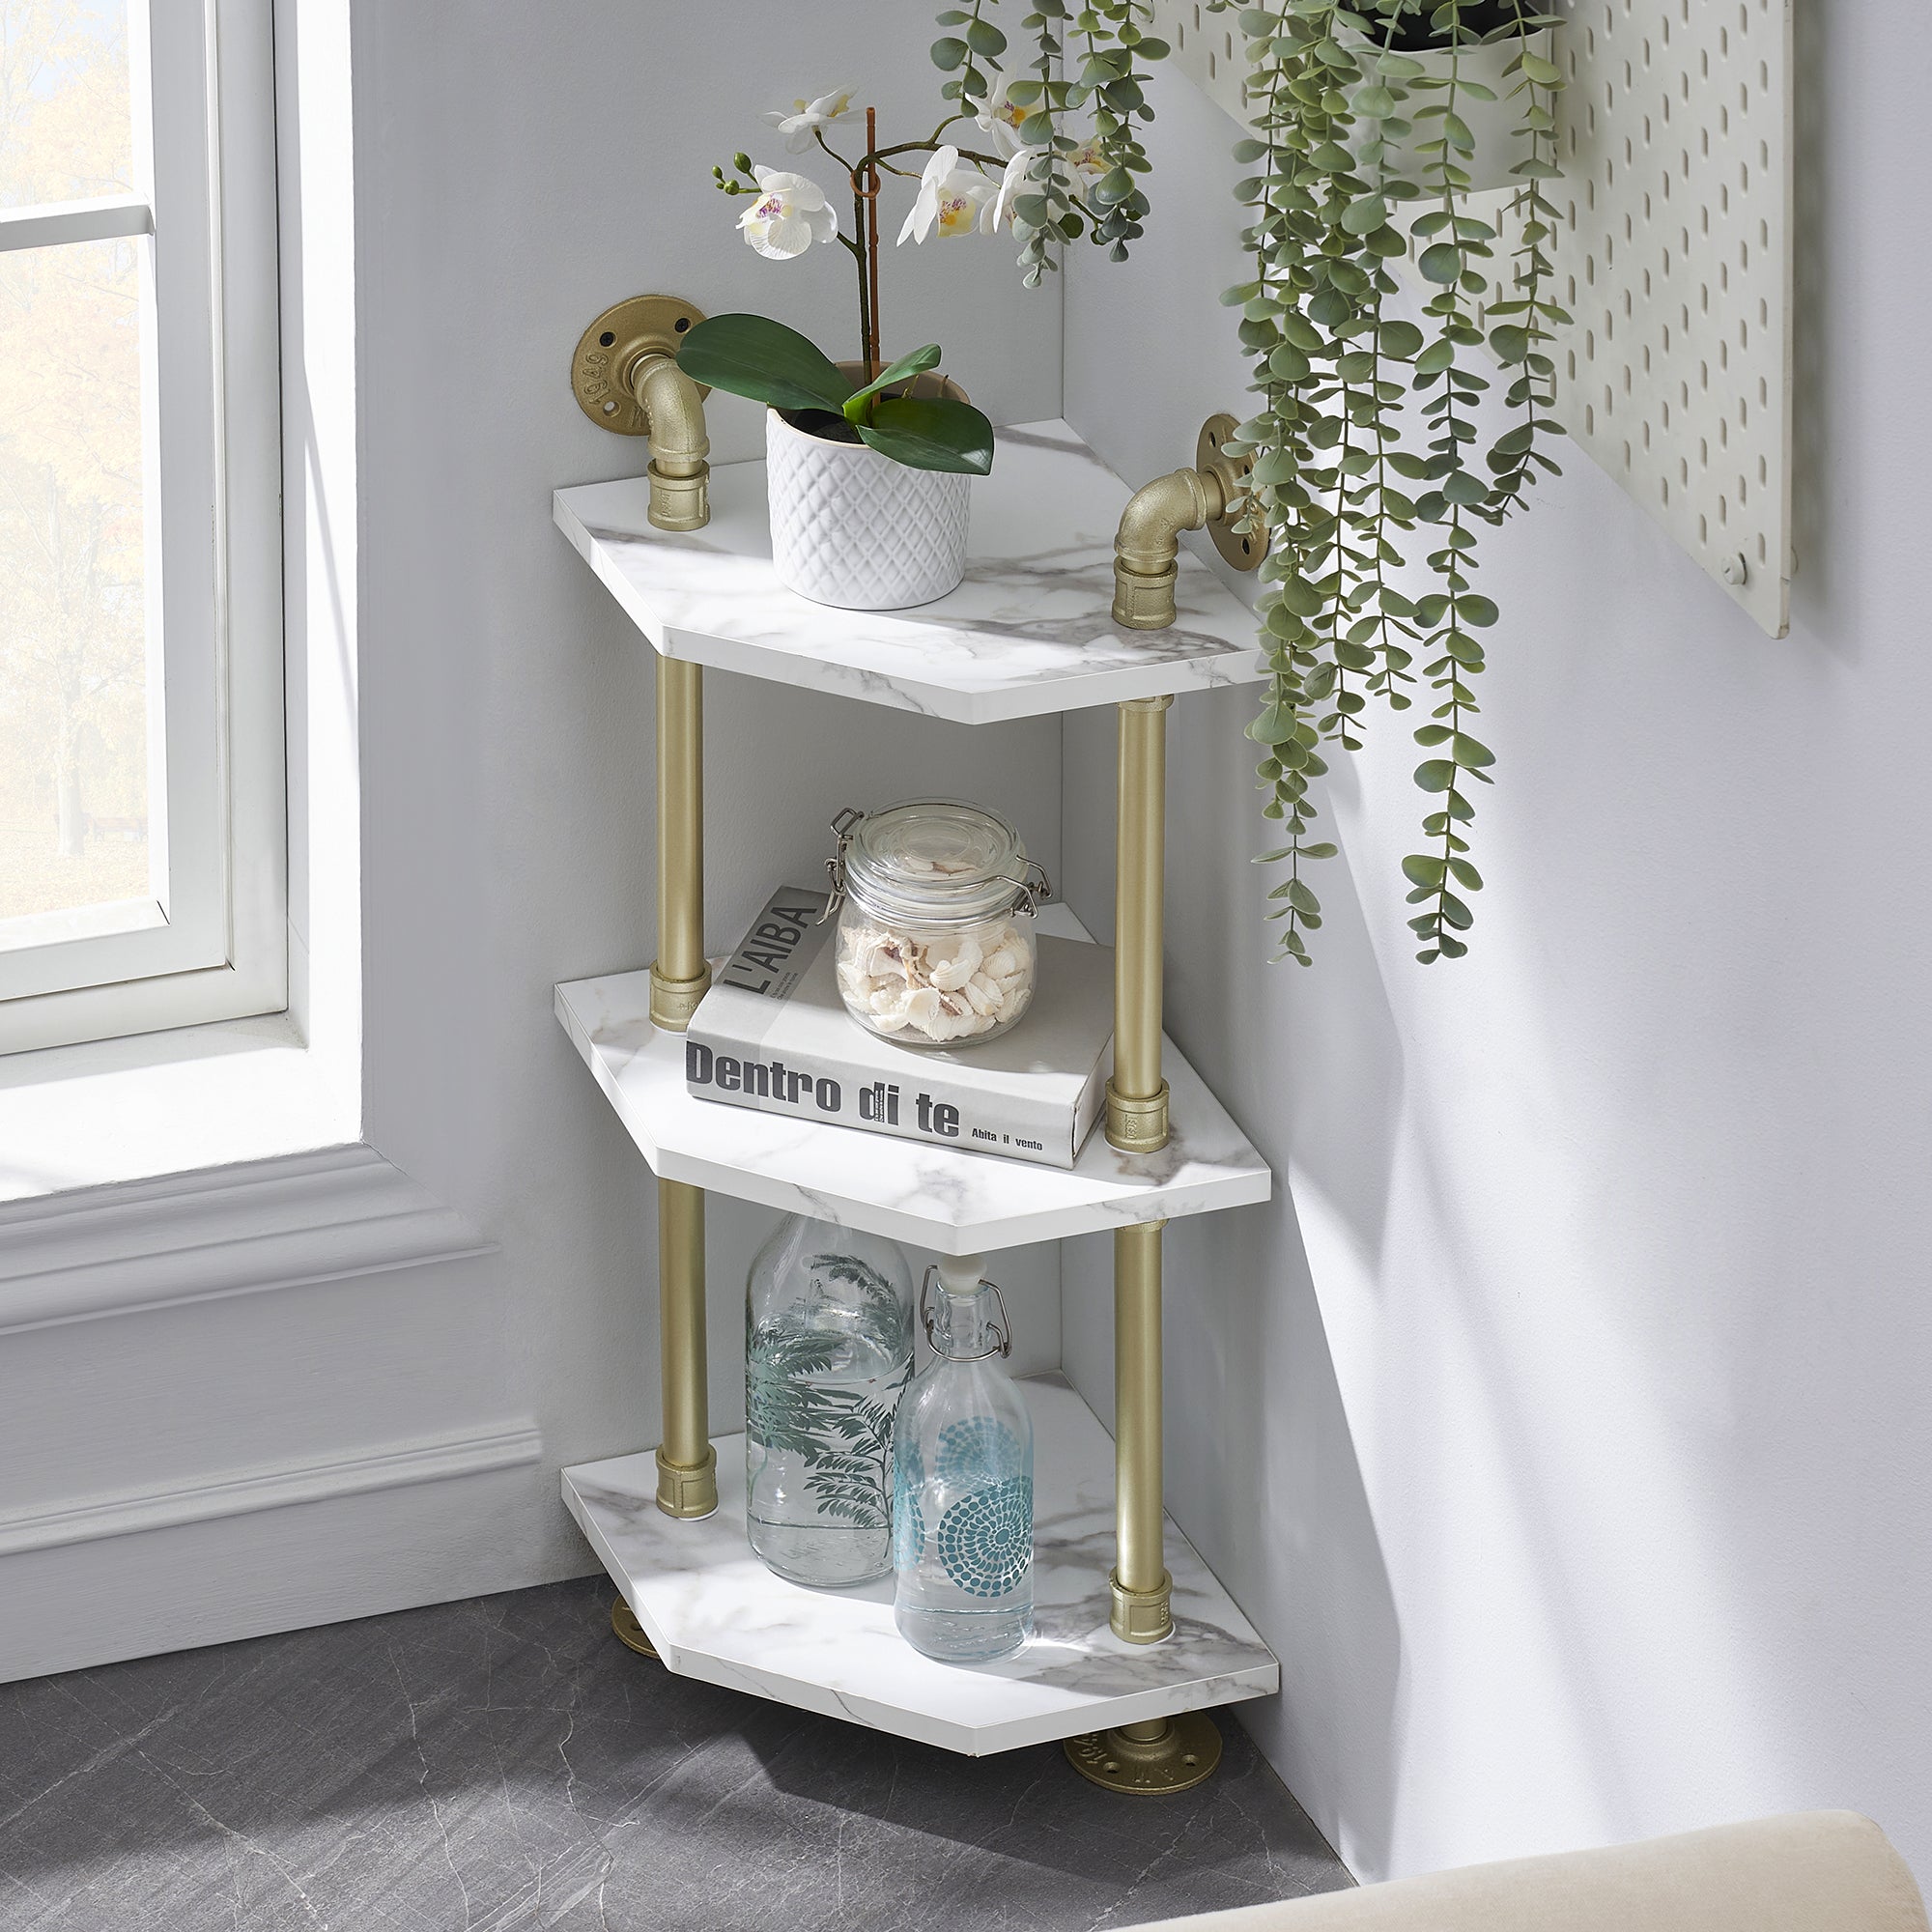 White Marble Corner Bath Shelf